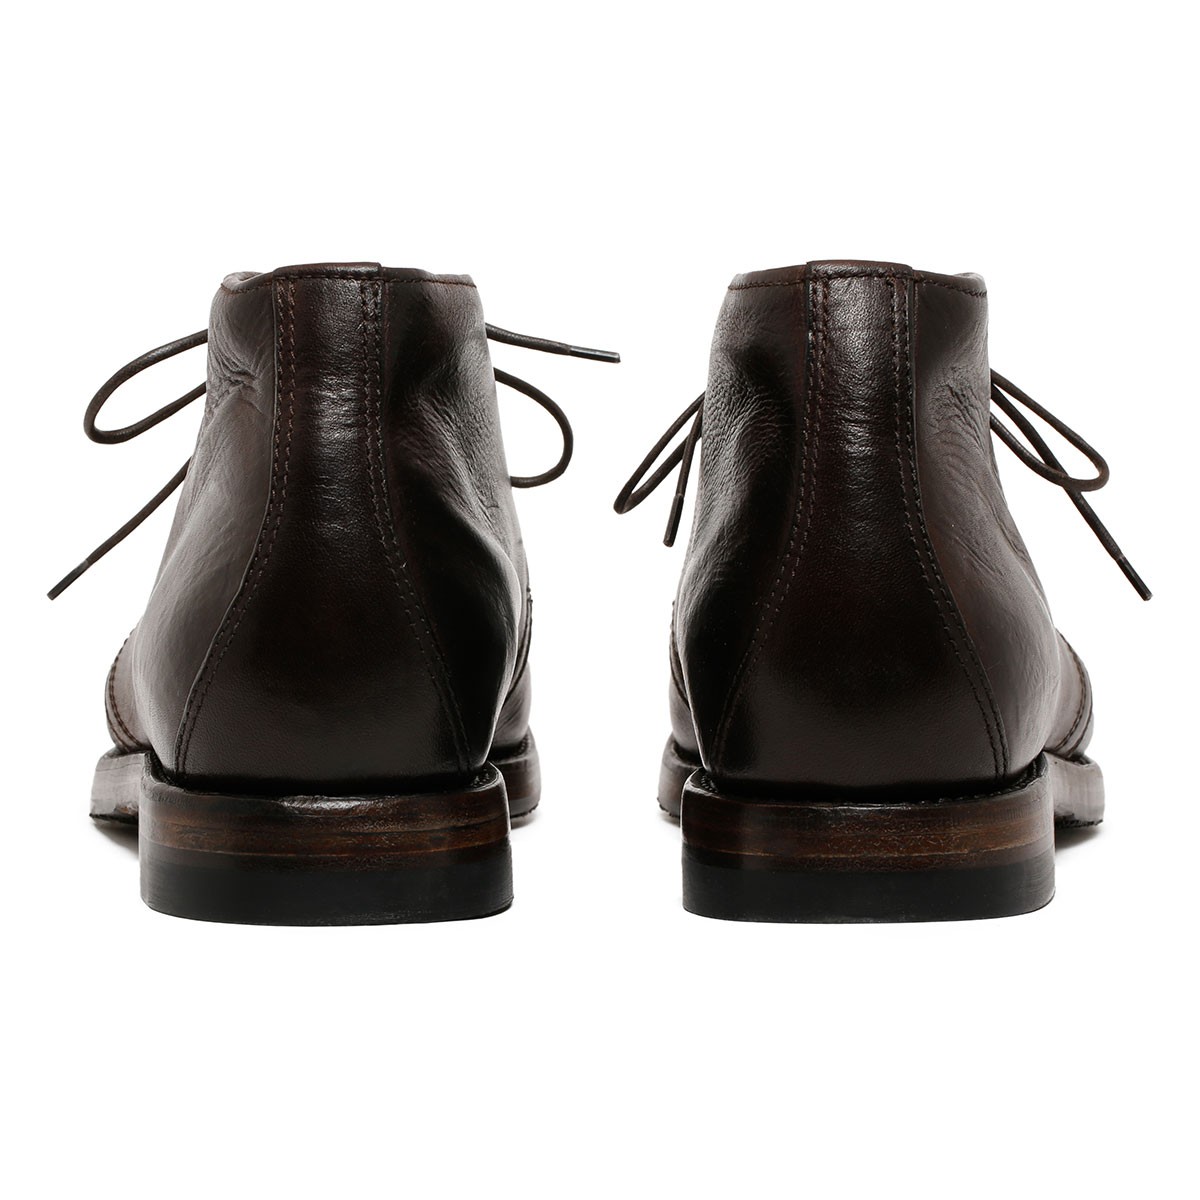 Dark-brown leather booties